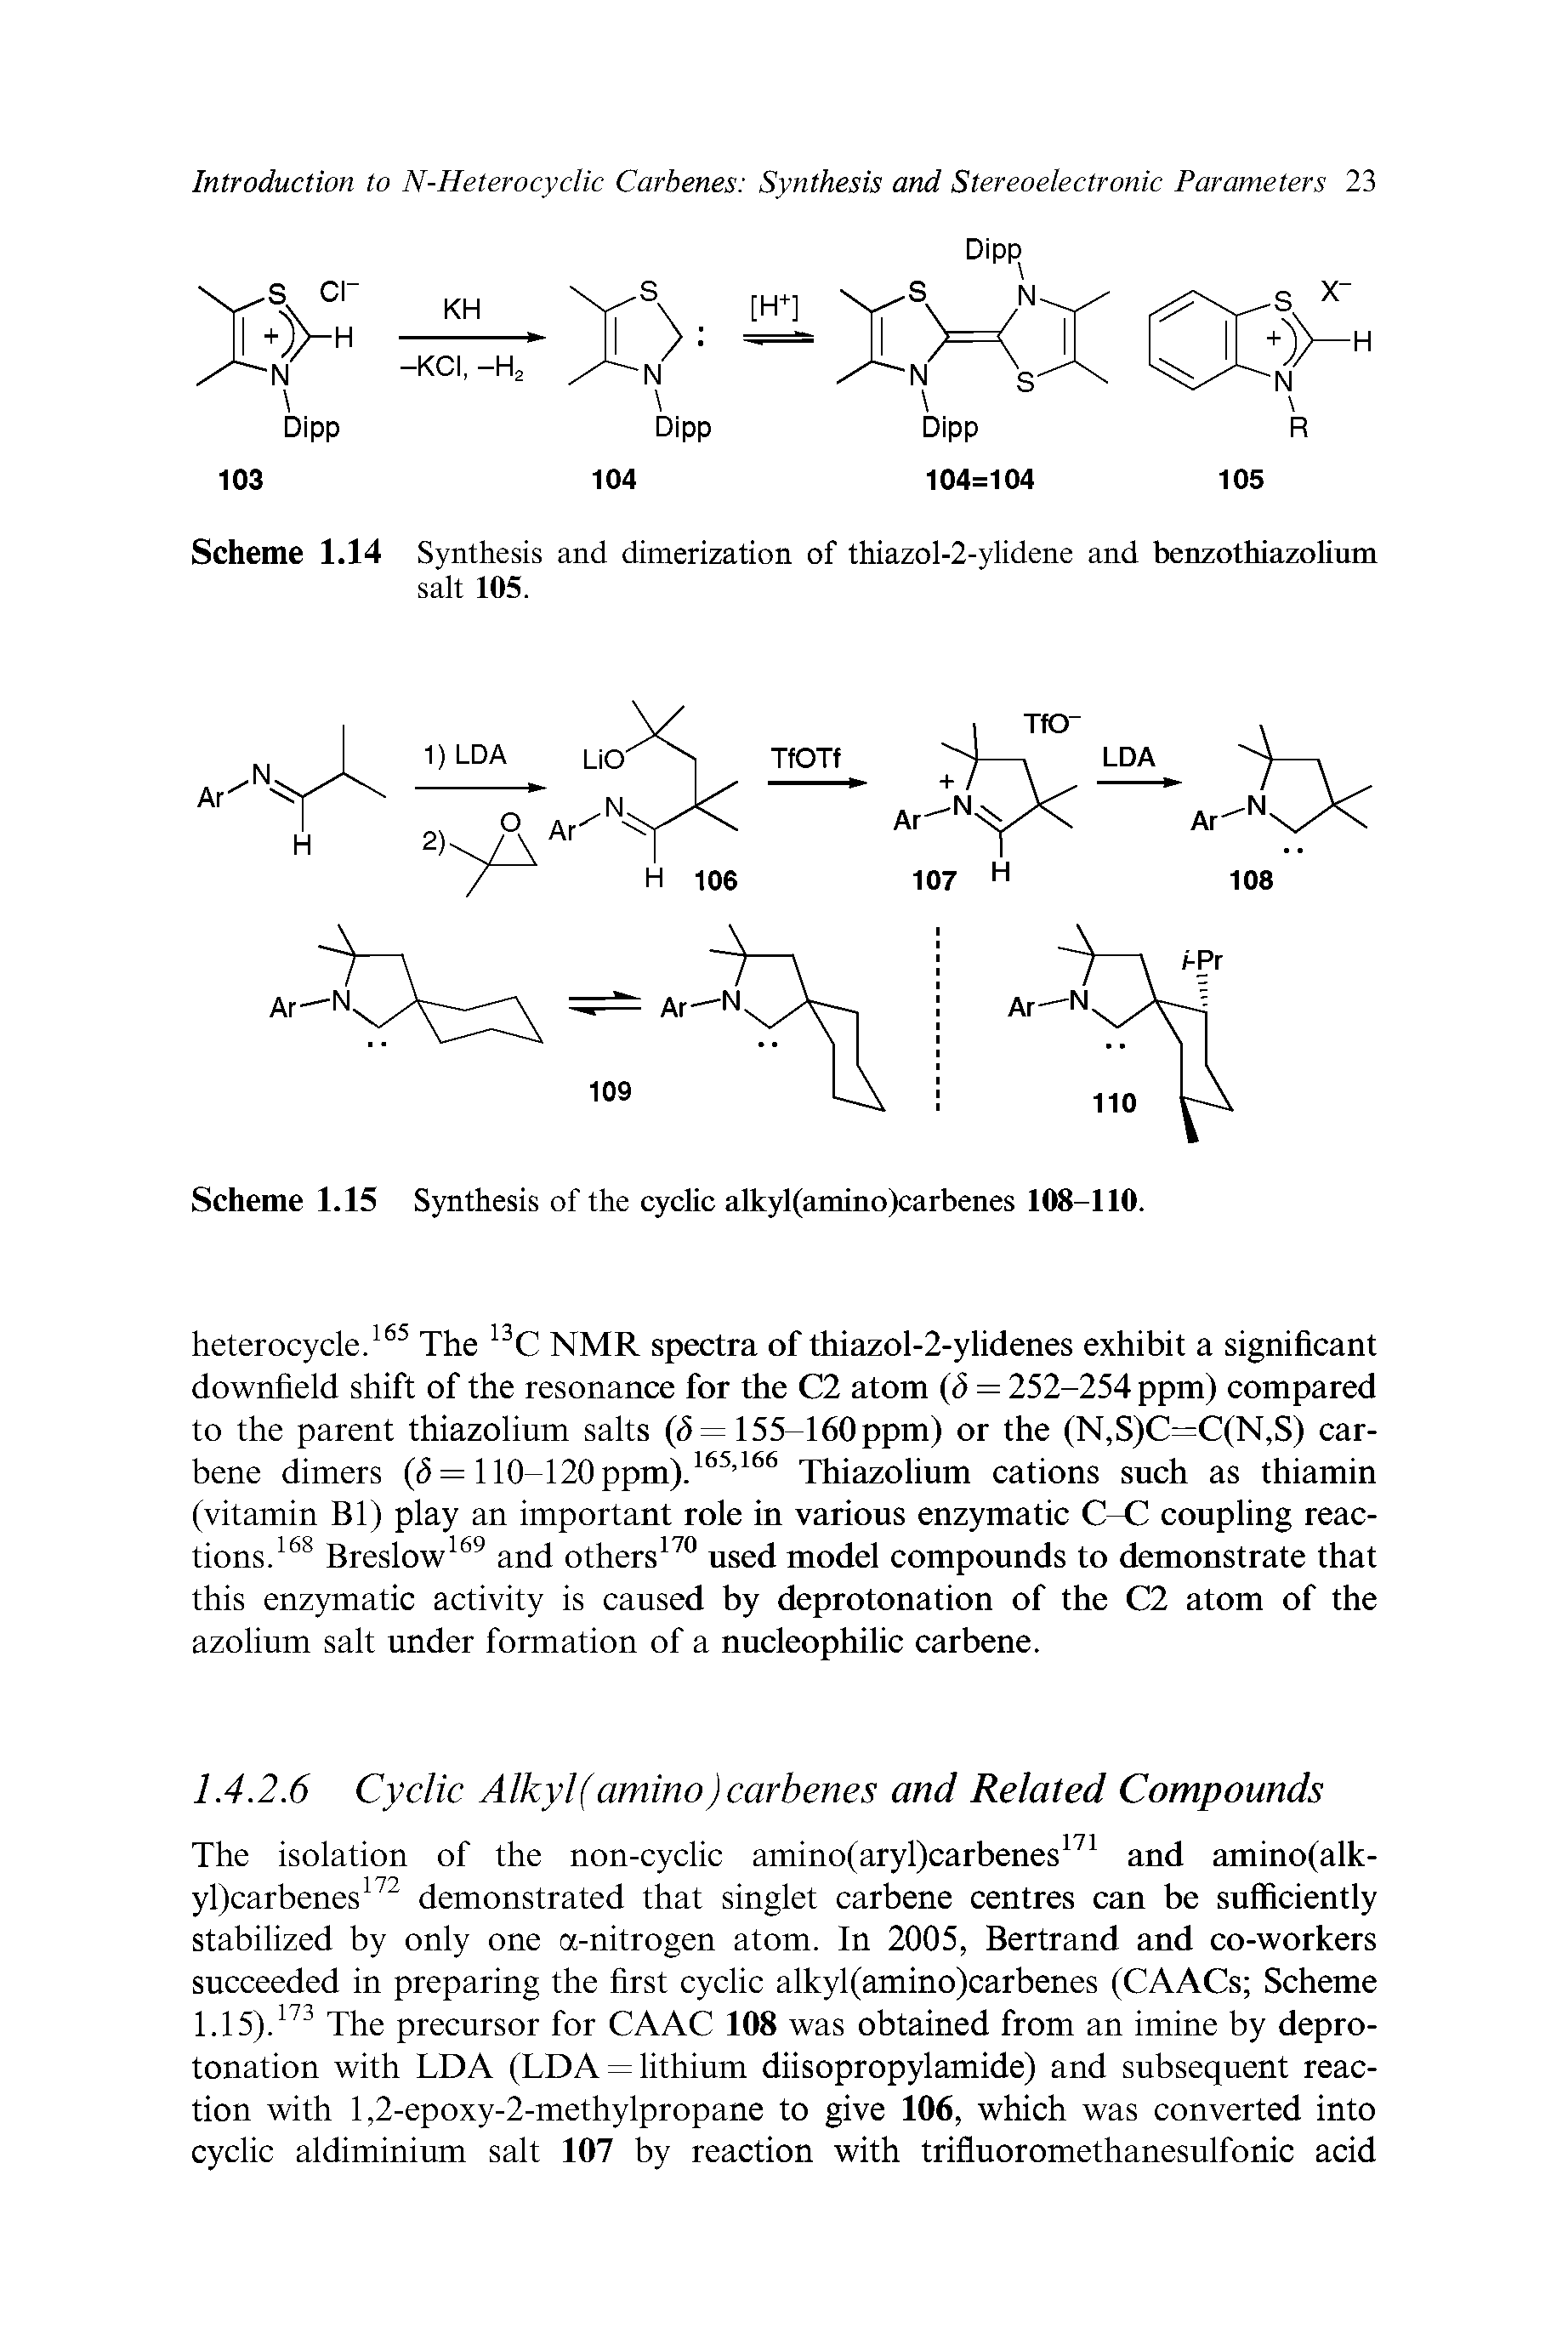 Scheme 1.14 Synthesis and dimerization of thiazol-2-ylidene and benzothiazolium salt 105.